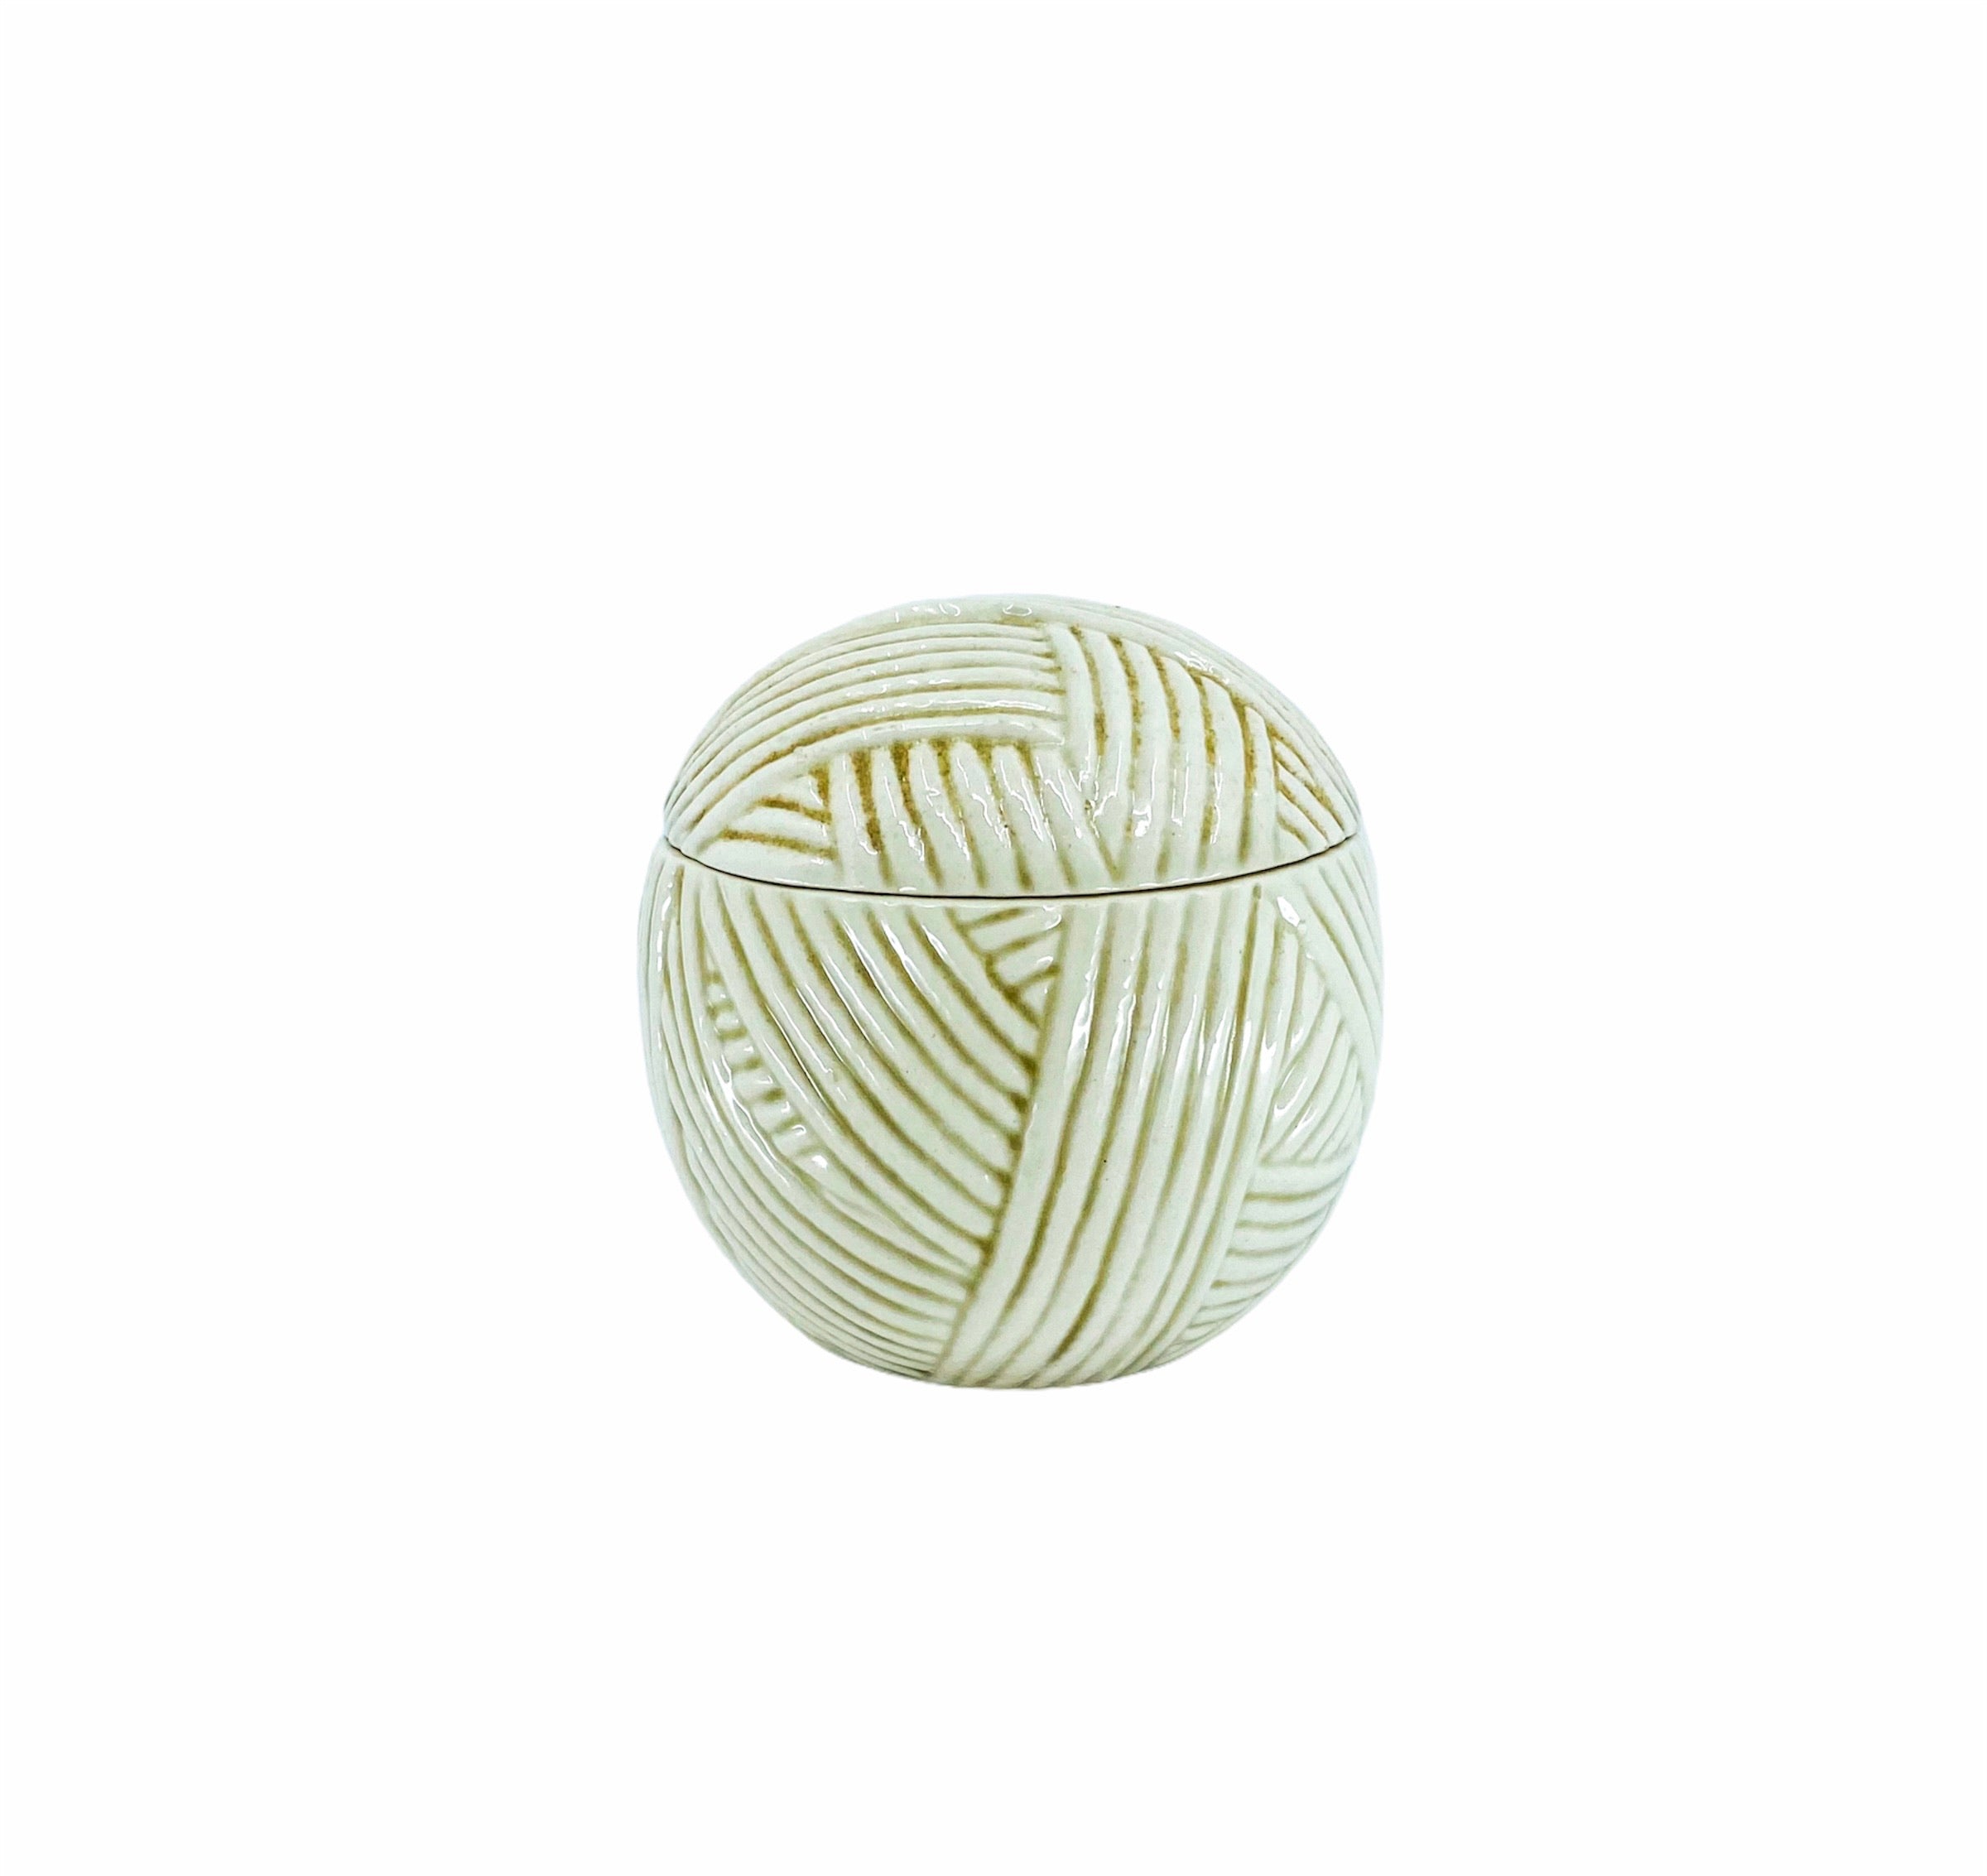 Ceramic Yarn Ball Stasher by C Mann 1978 Japan